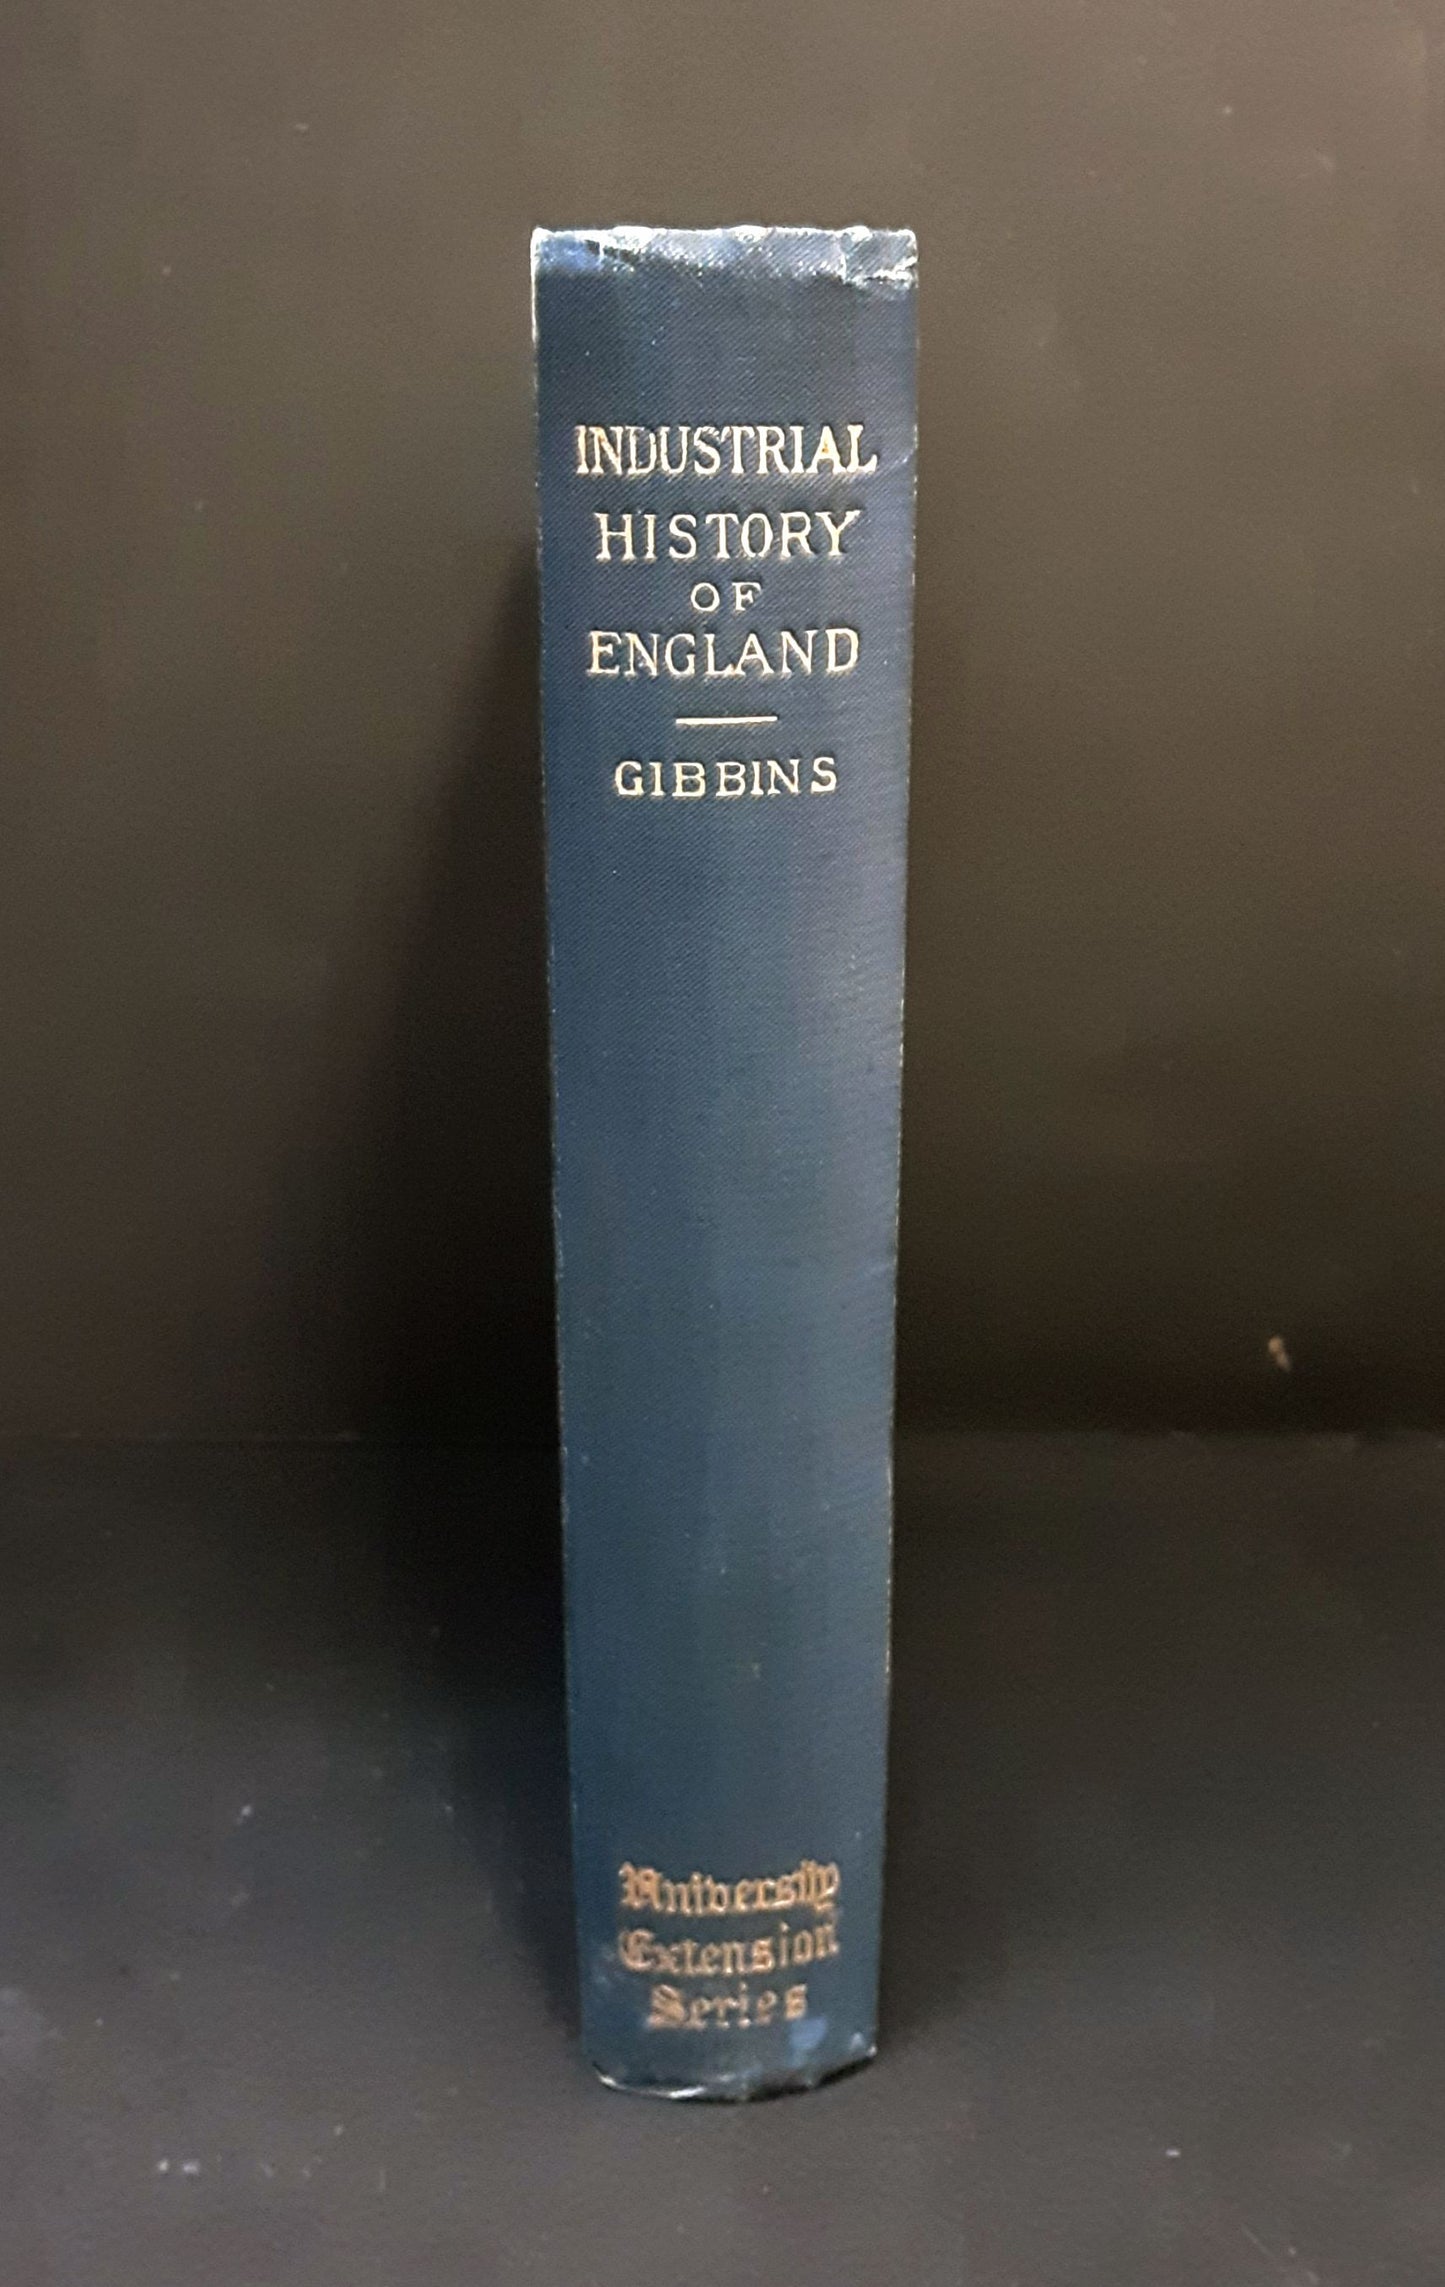 Industrial History of England by H de B. Gibbins, Methuen & Co 1899